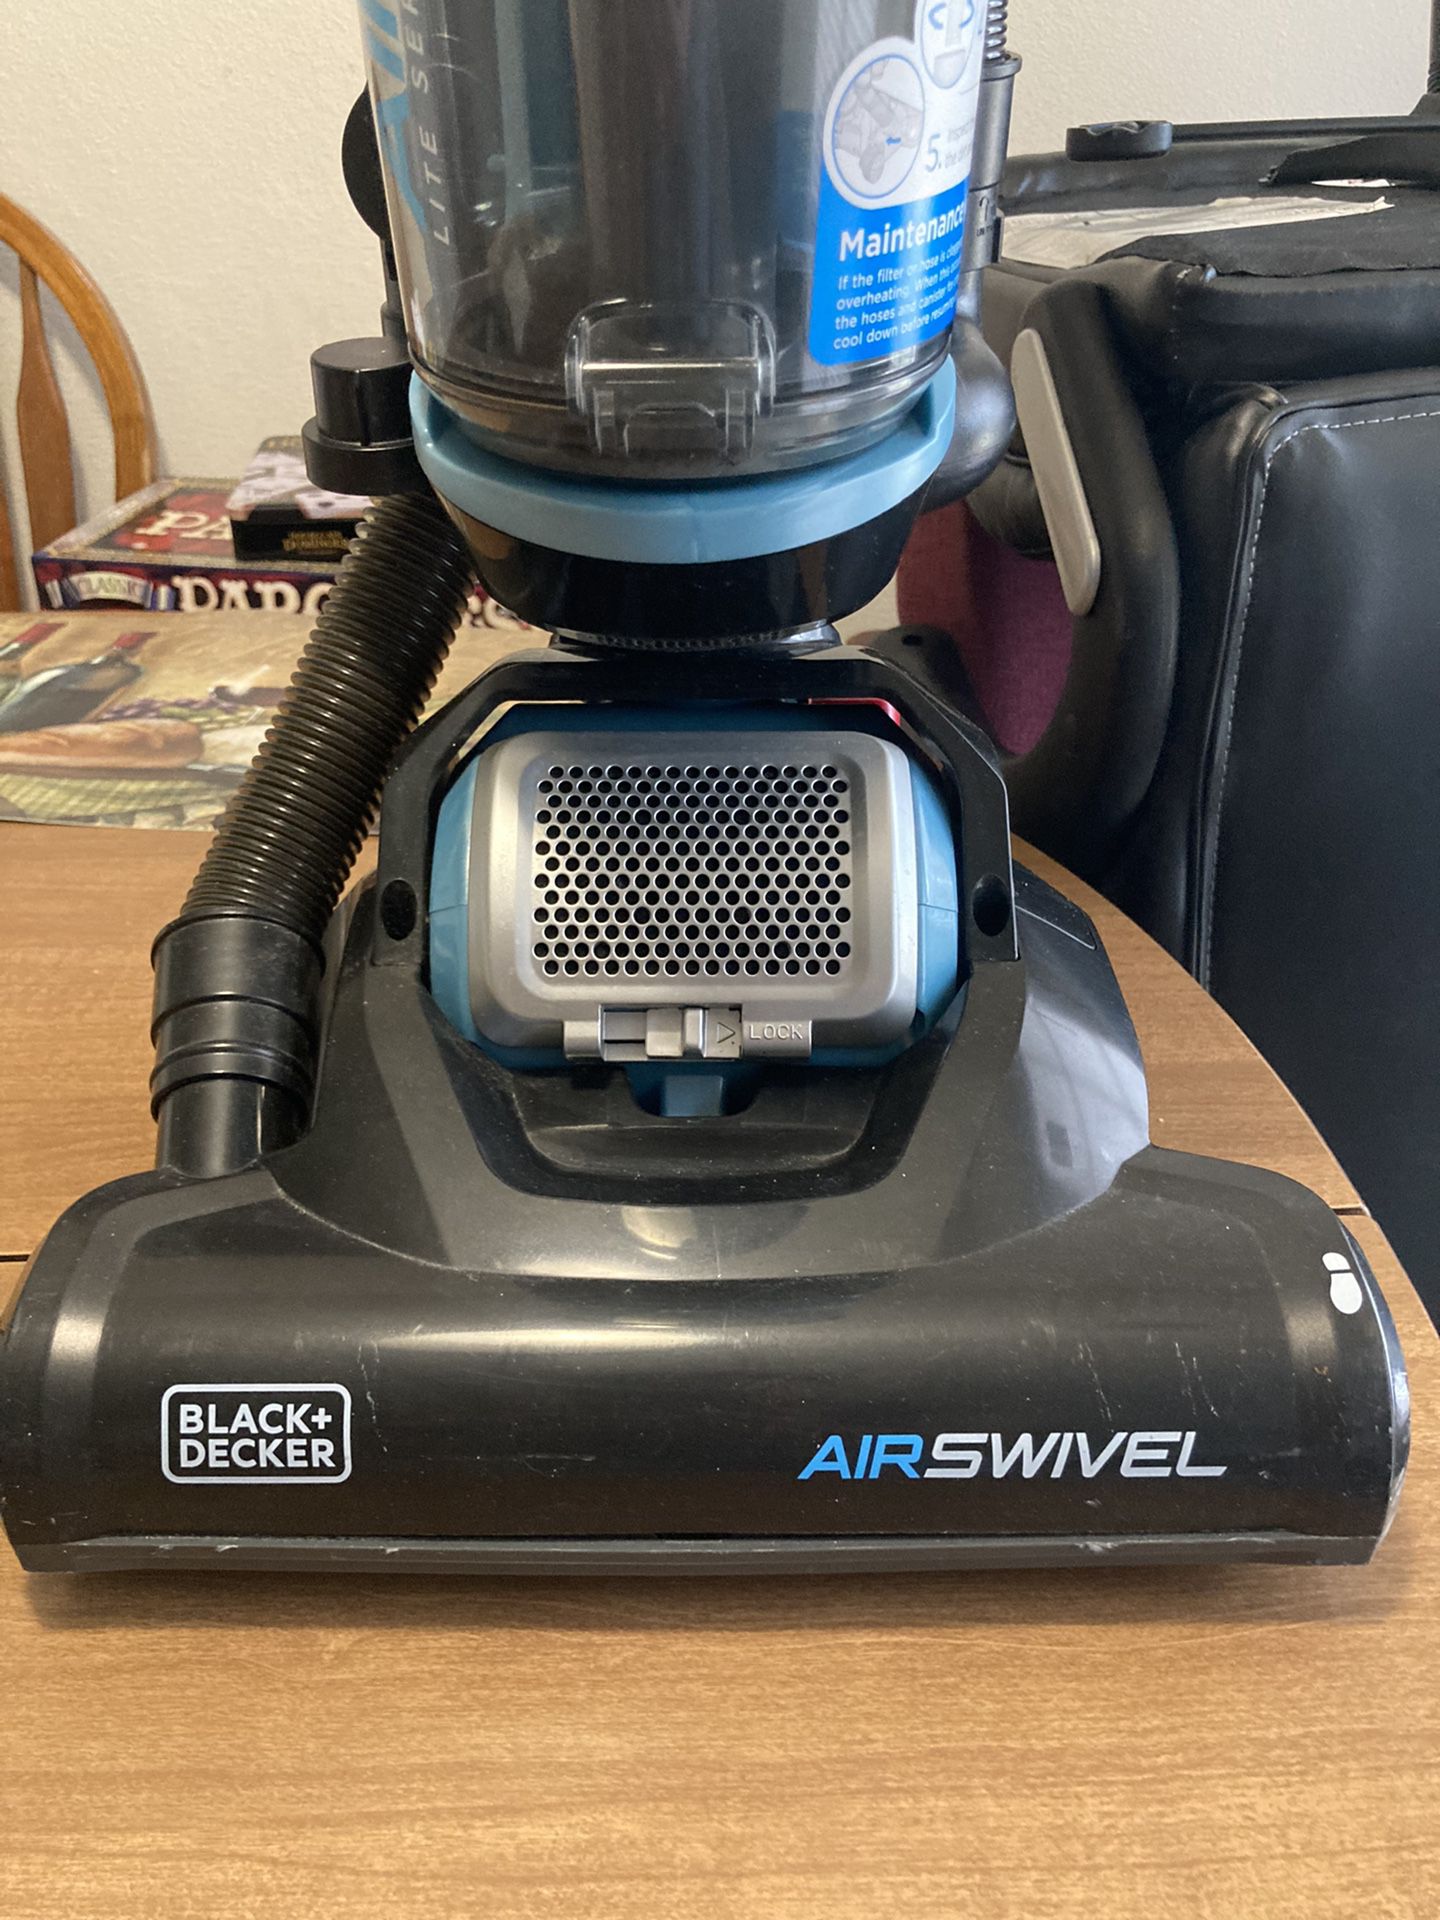 Black and decker air swivel vacuum for Sale in San Antonio, TX - OfferUp